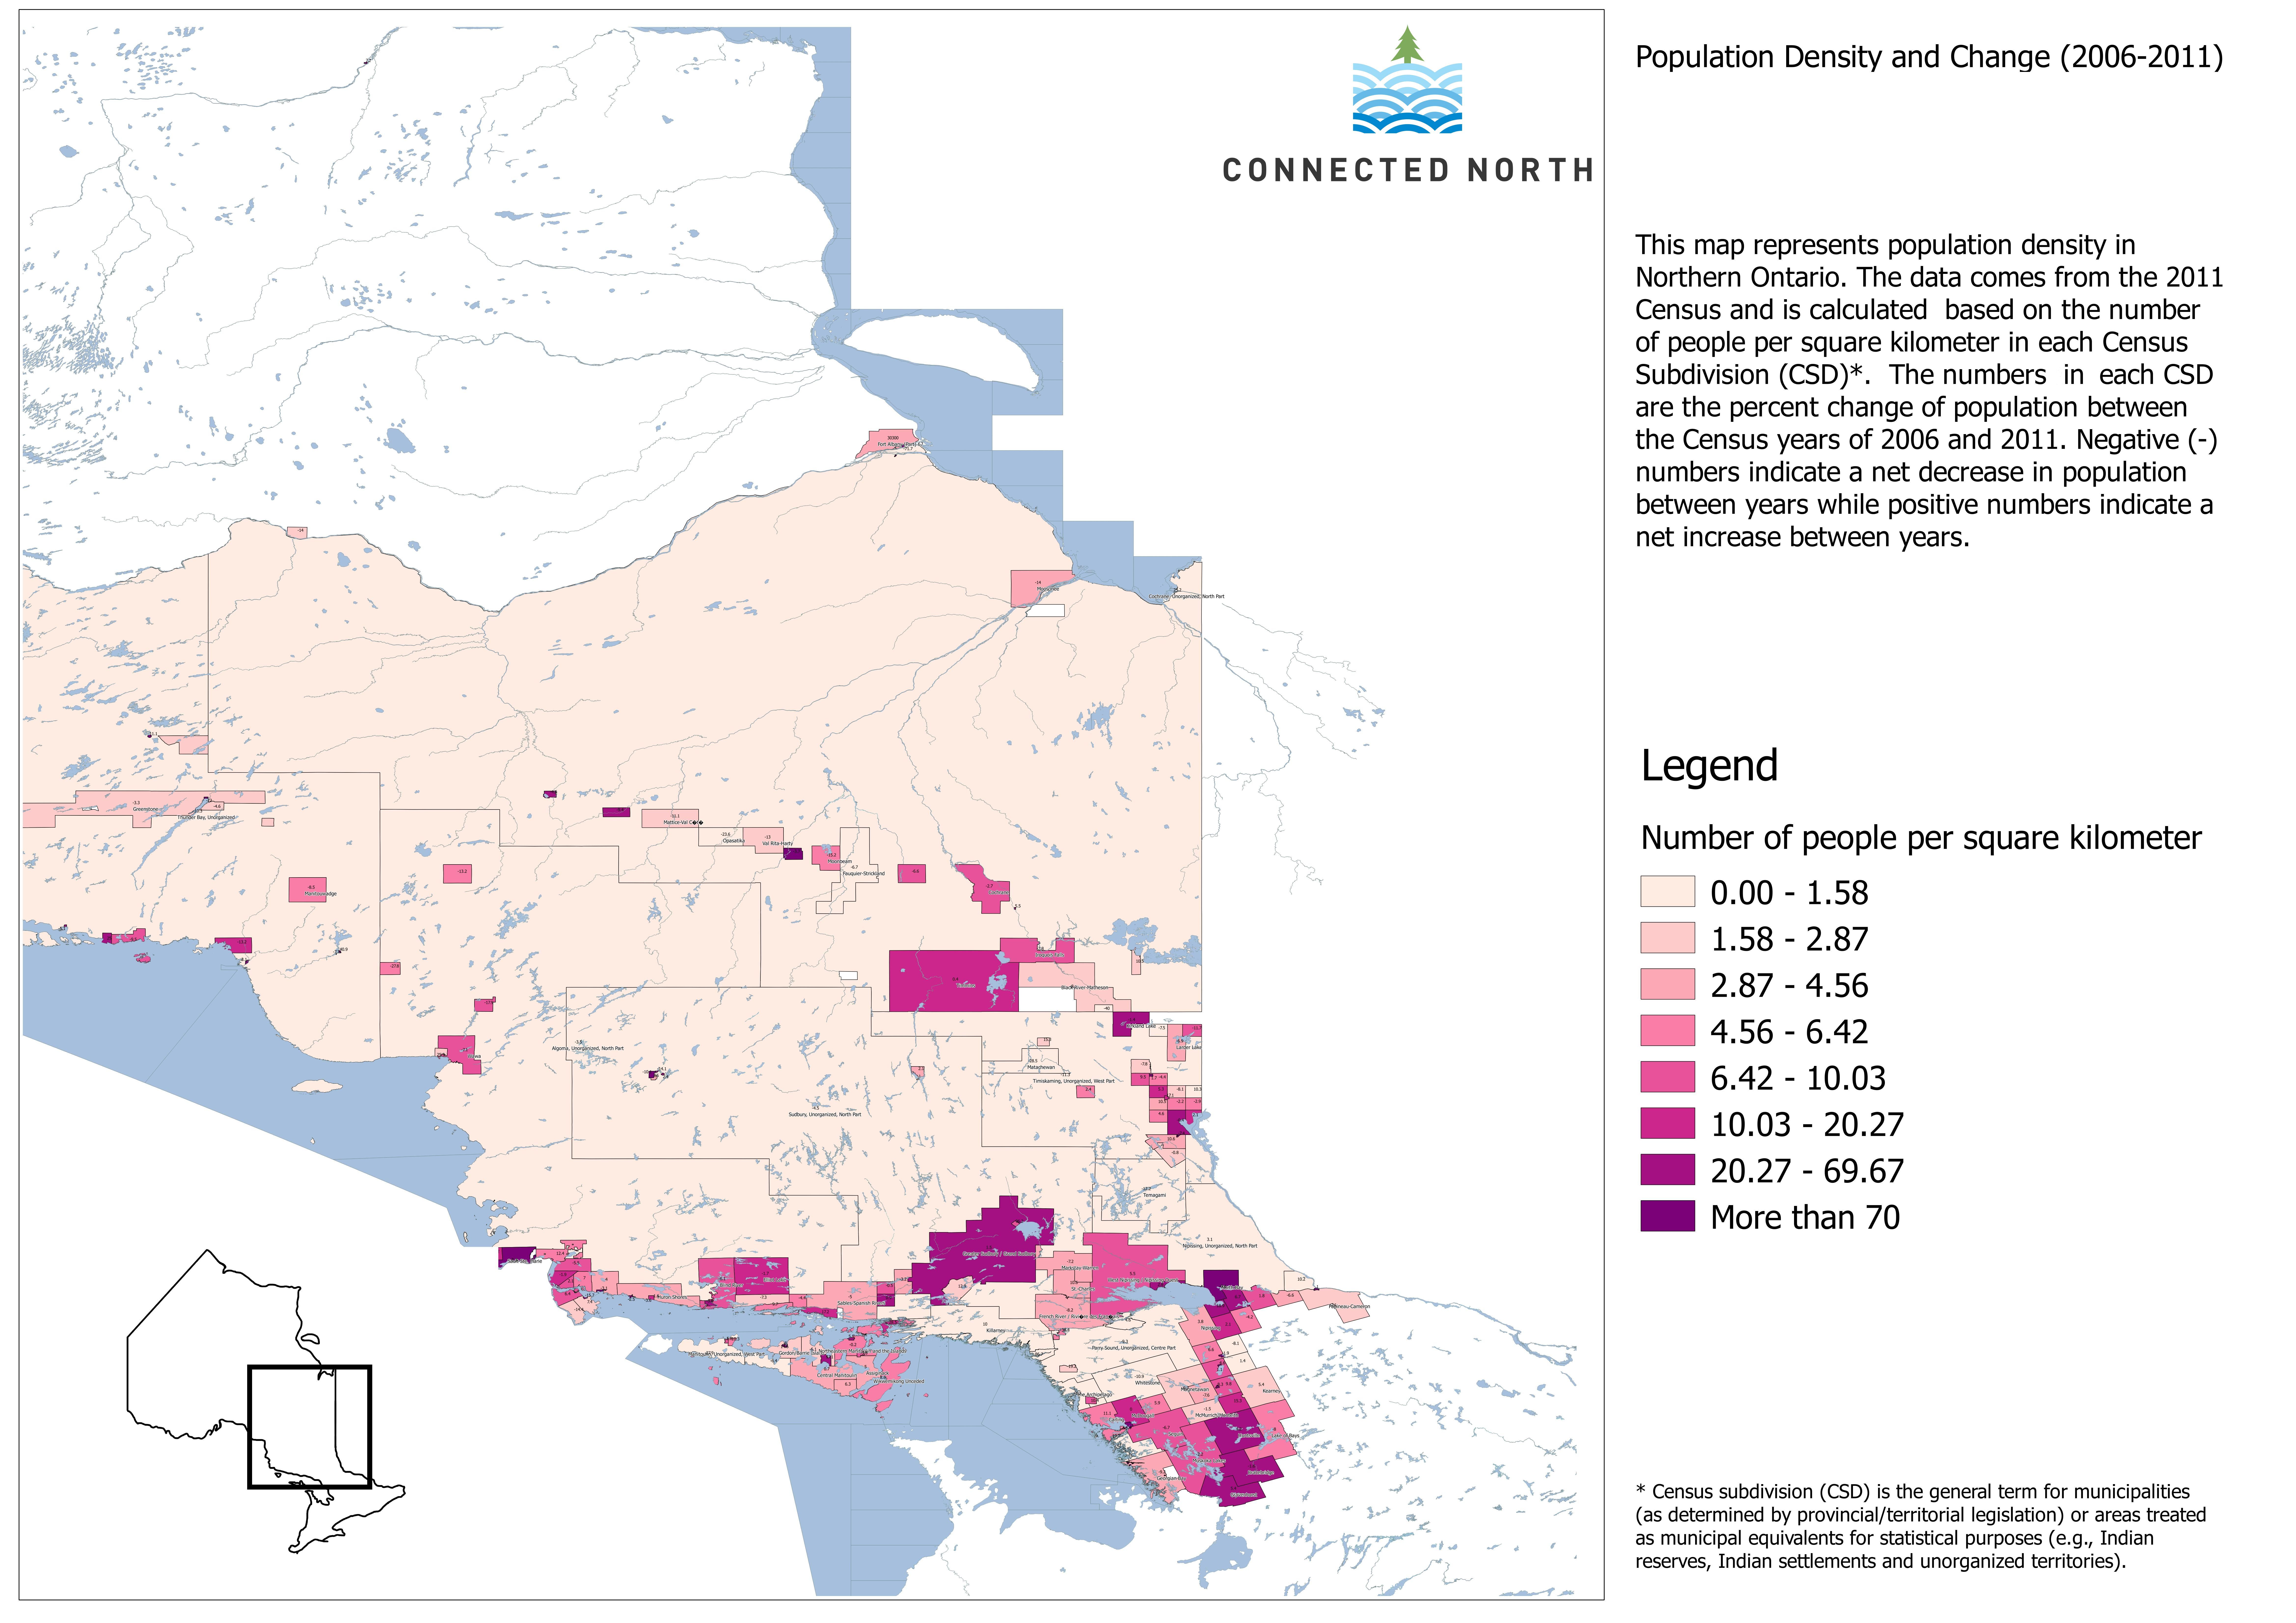 Population-density-and-change-Northeast1